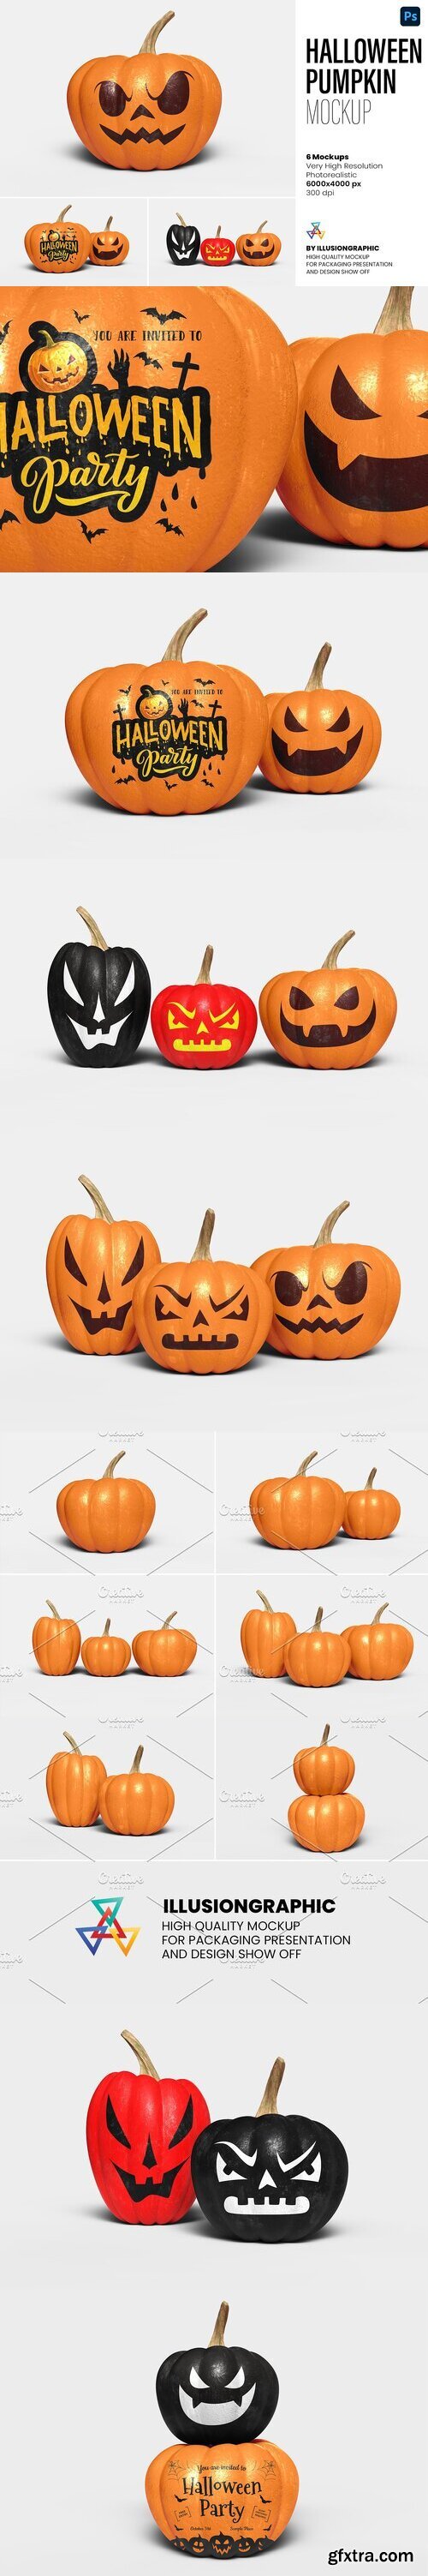 CreativeMarket - Halloween Pumpkin Mockup - 6 views 10210948